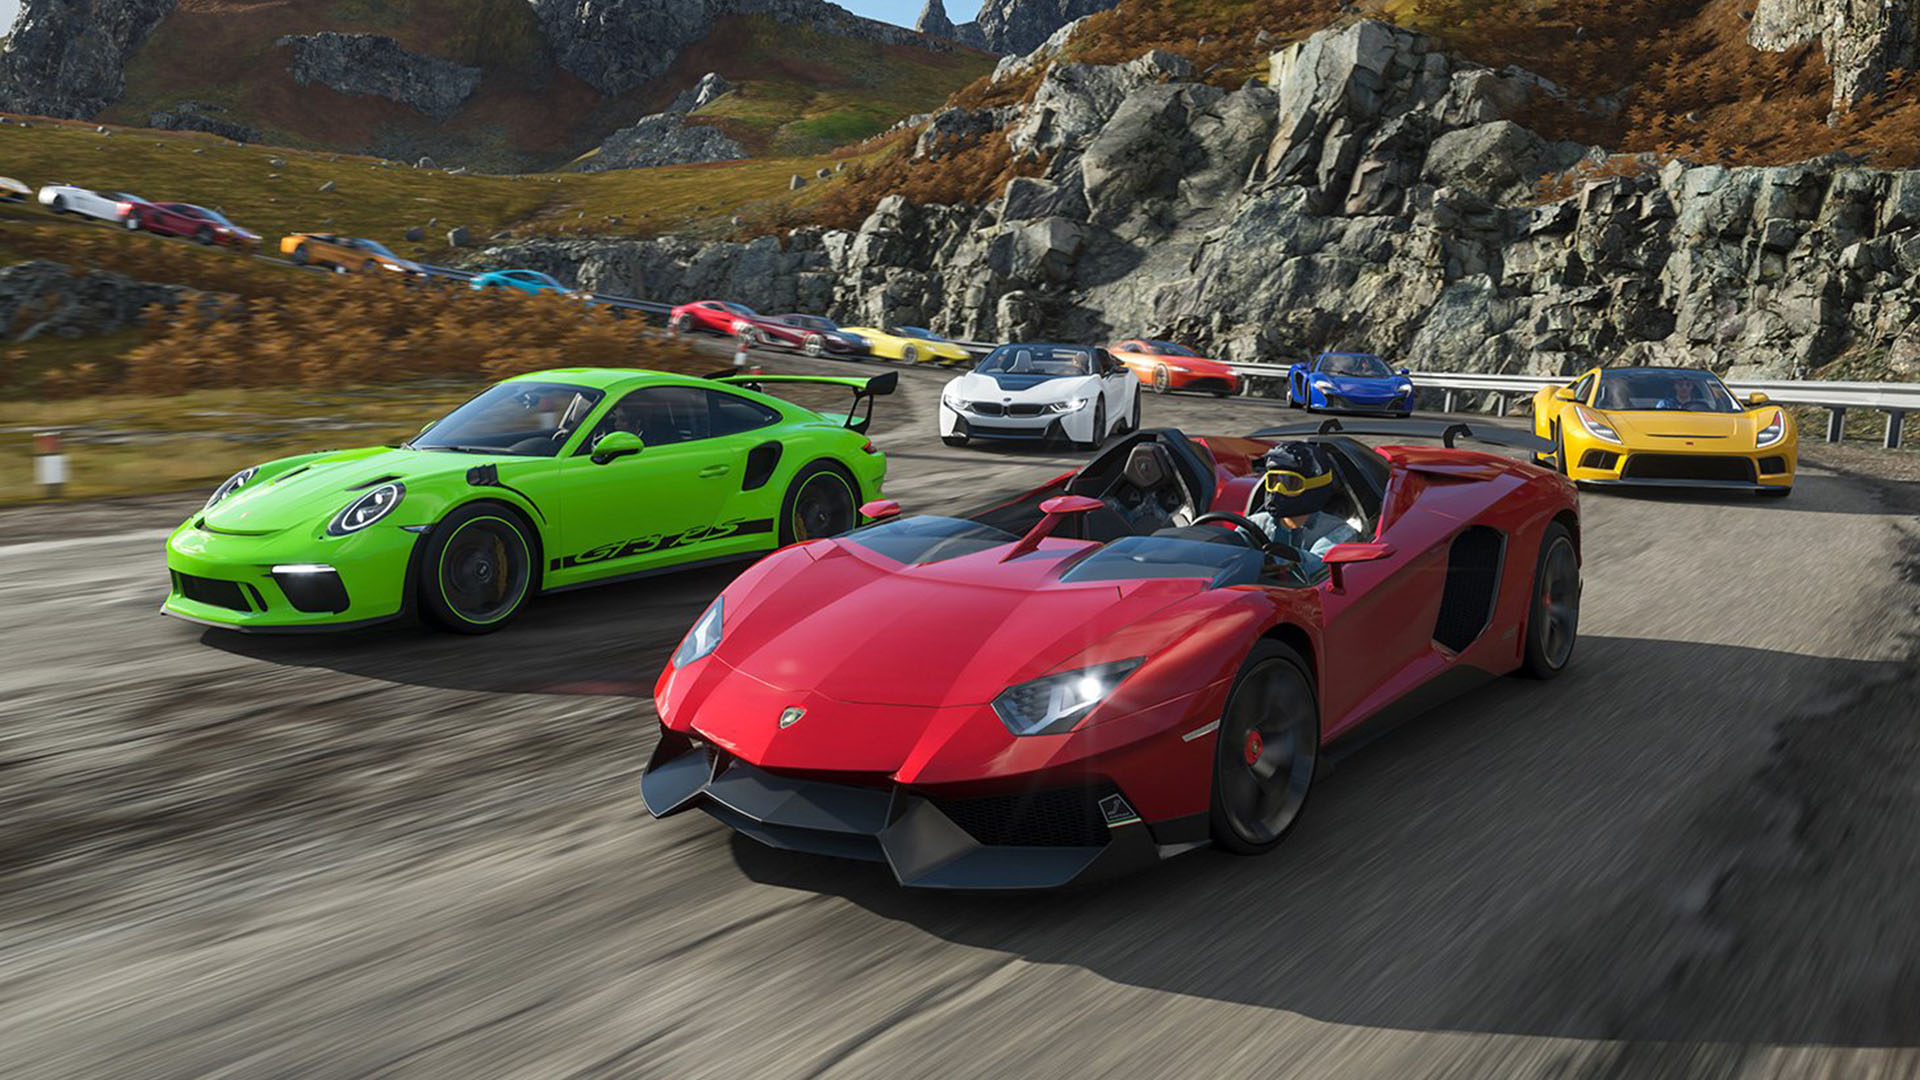 Forza Horizon 4 update adds this legendary car